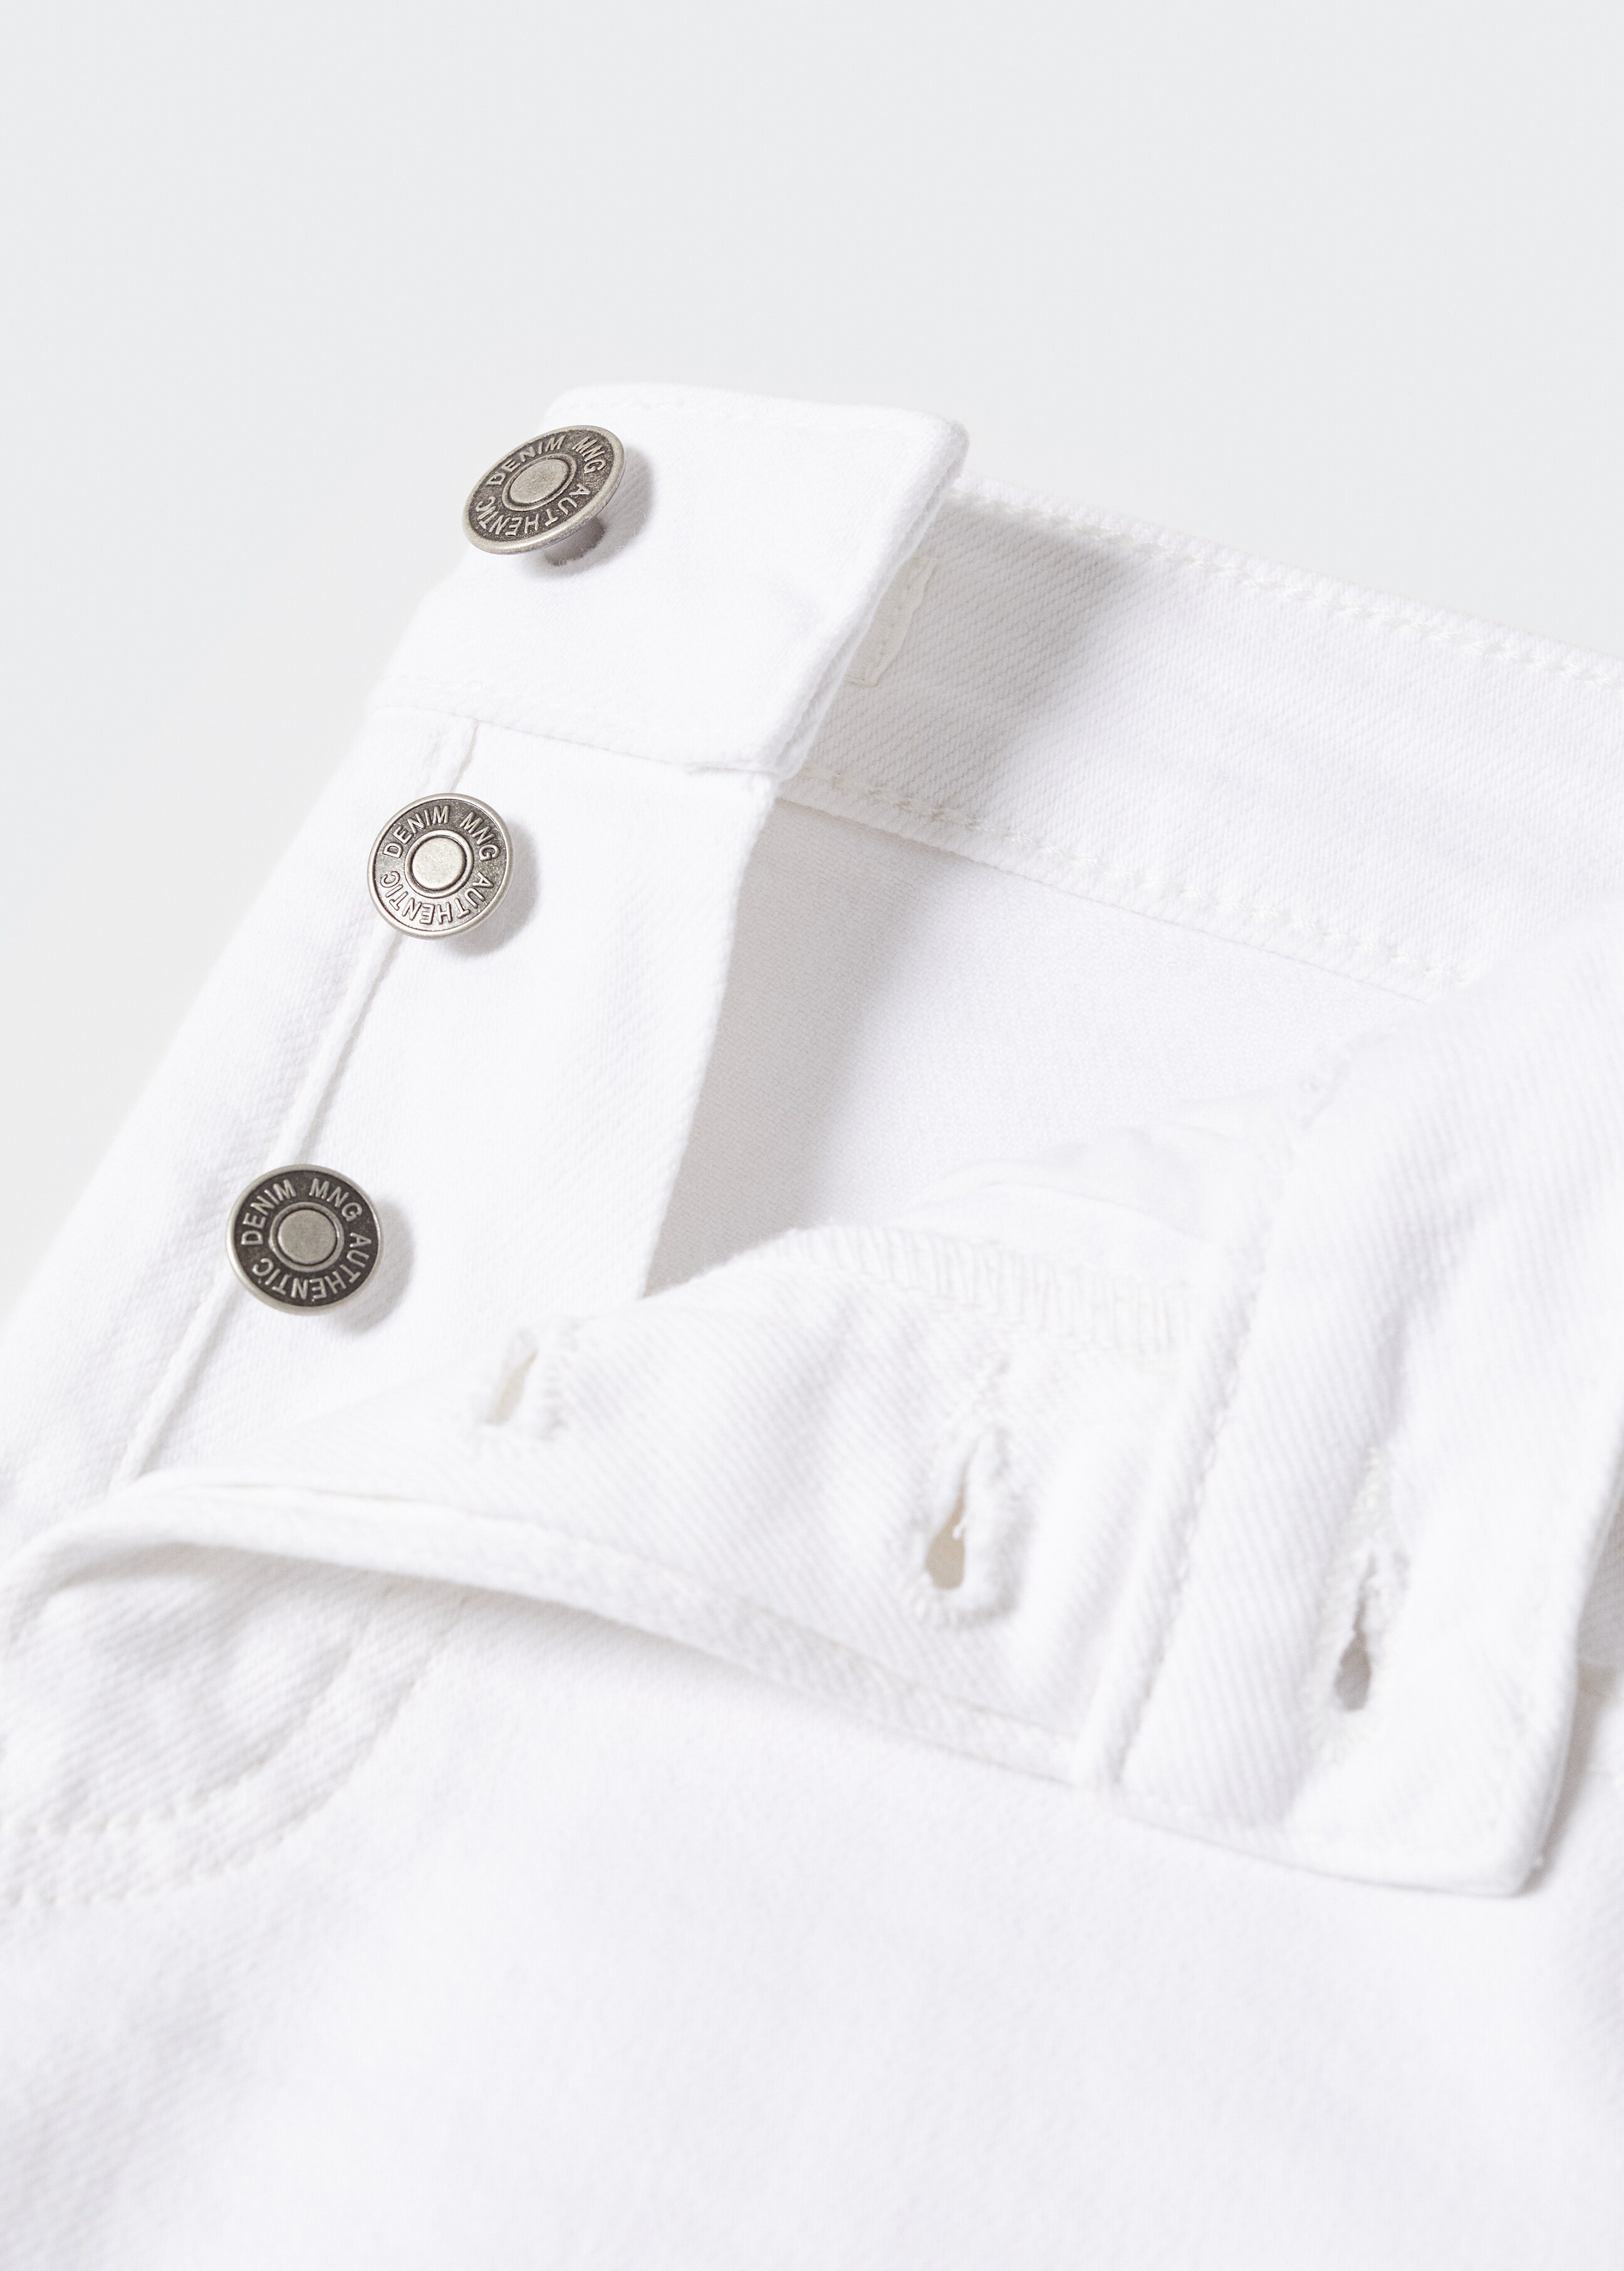 Cotton denim shorts - Details of the article 8